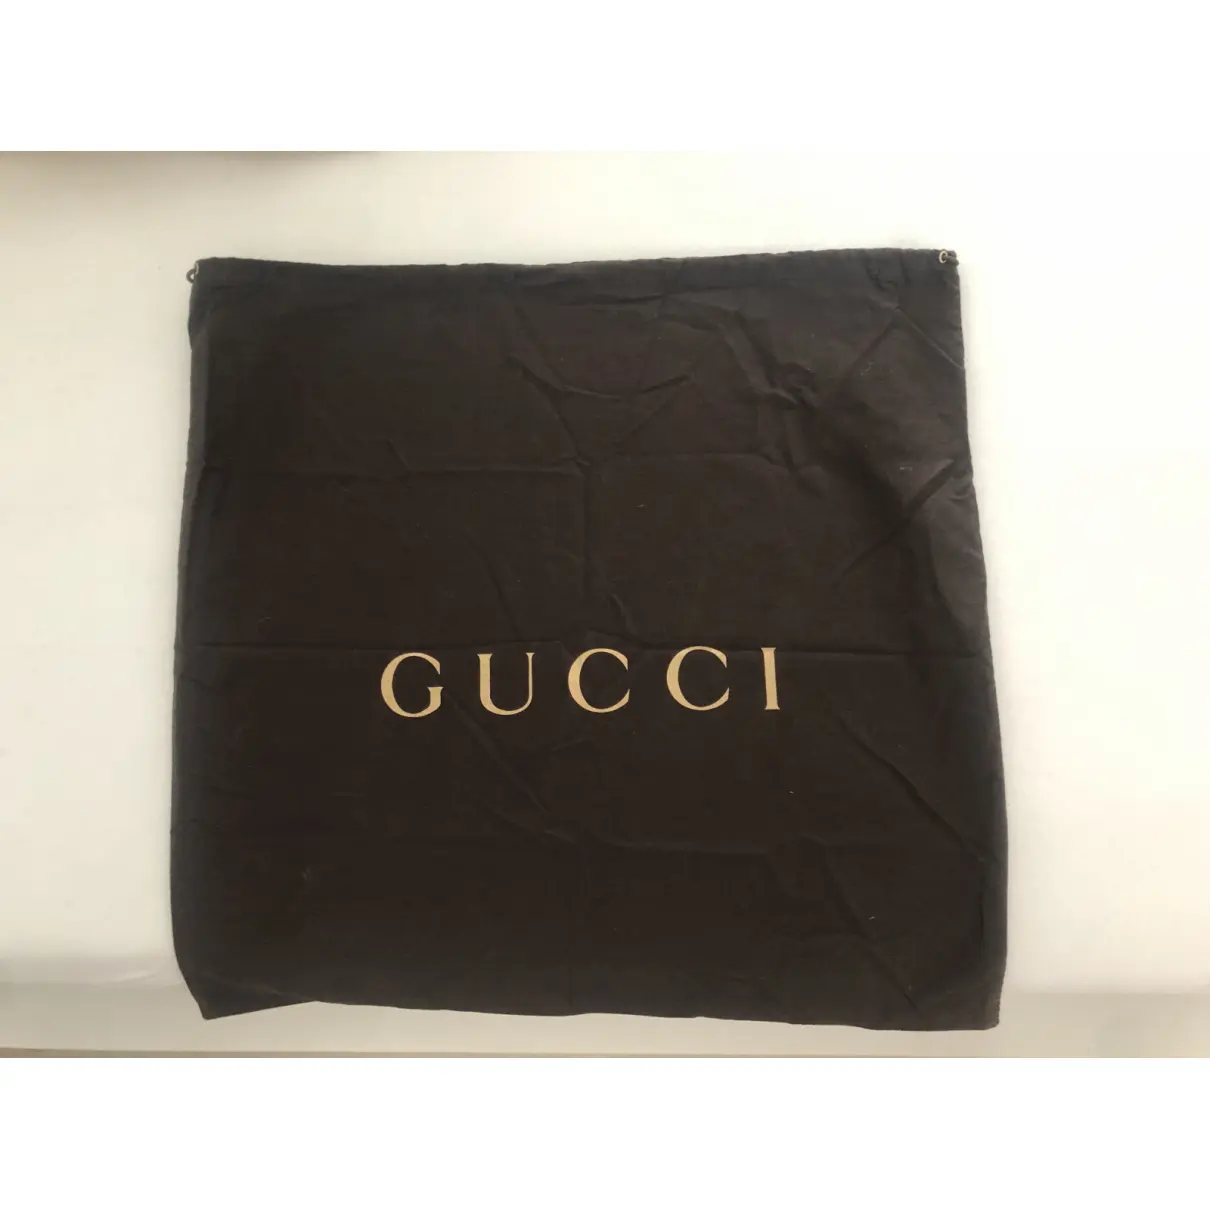 Bamboo Shopper leather tote Gucci